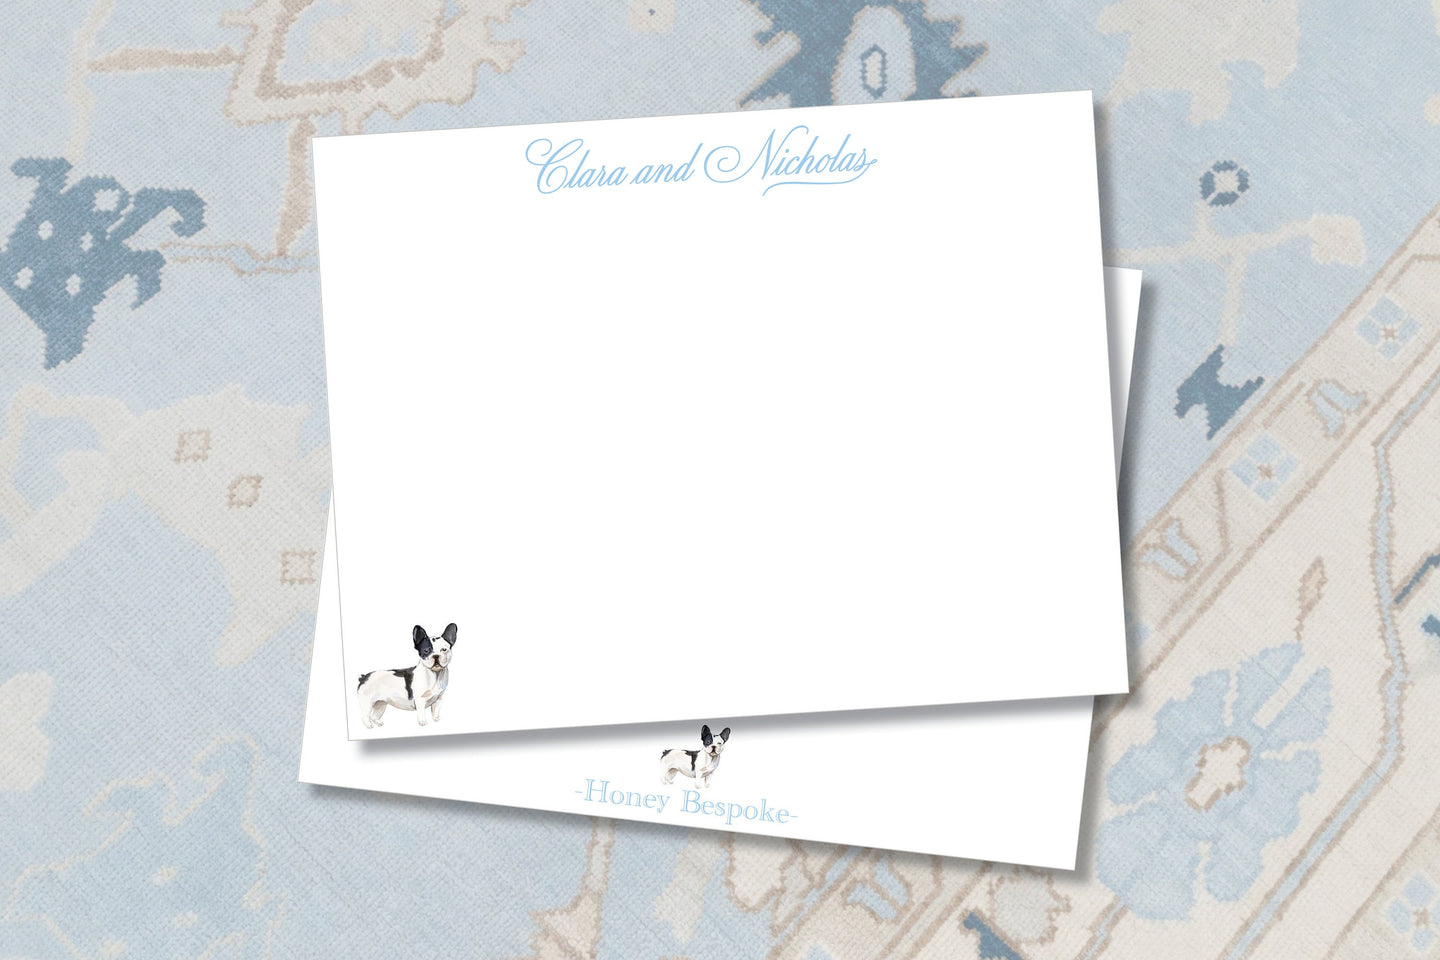 Personalized French Bulldog Stationery / Frenchie Stationery Set / Personalized Thank You Cards / Personalized Stationary / Thank you Notes